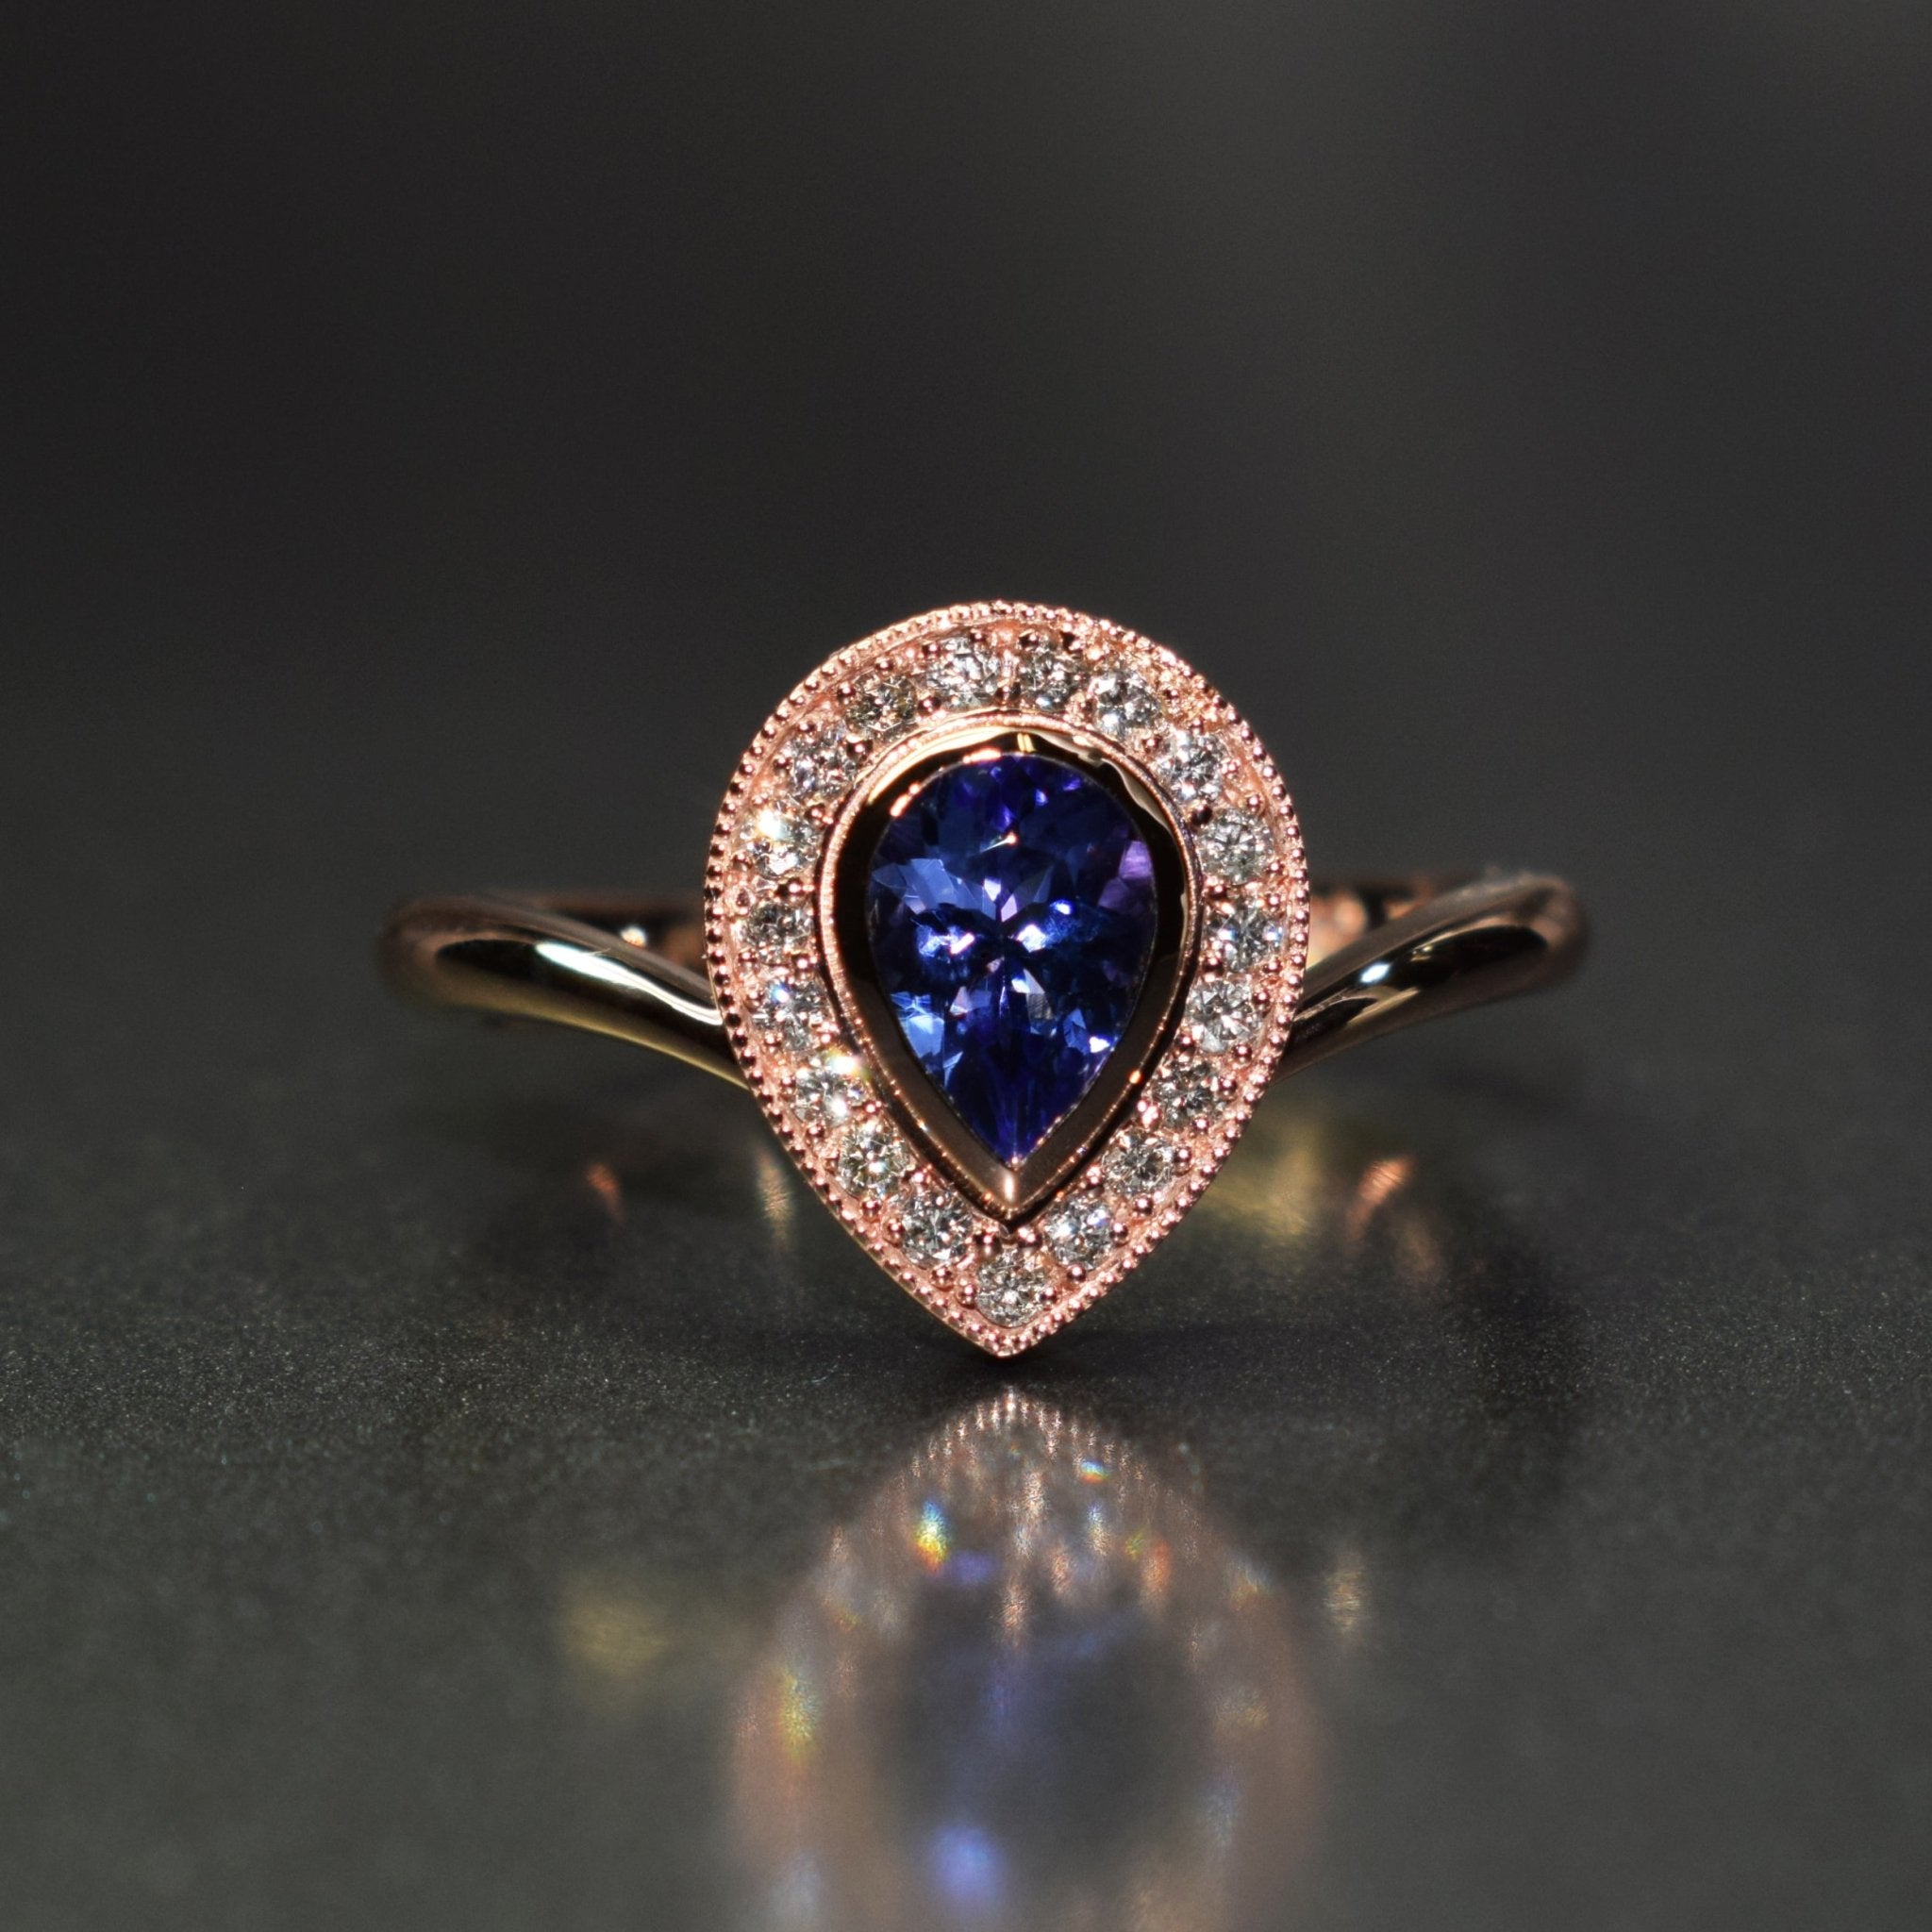 9ct rose gold pear shape halo set with tanzanite & diamonds - Scherman's - Engagement rings - Scherman's